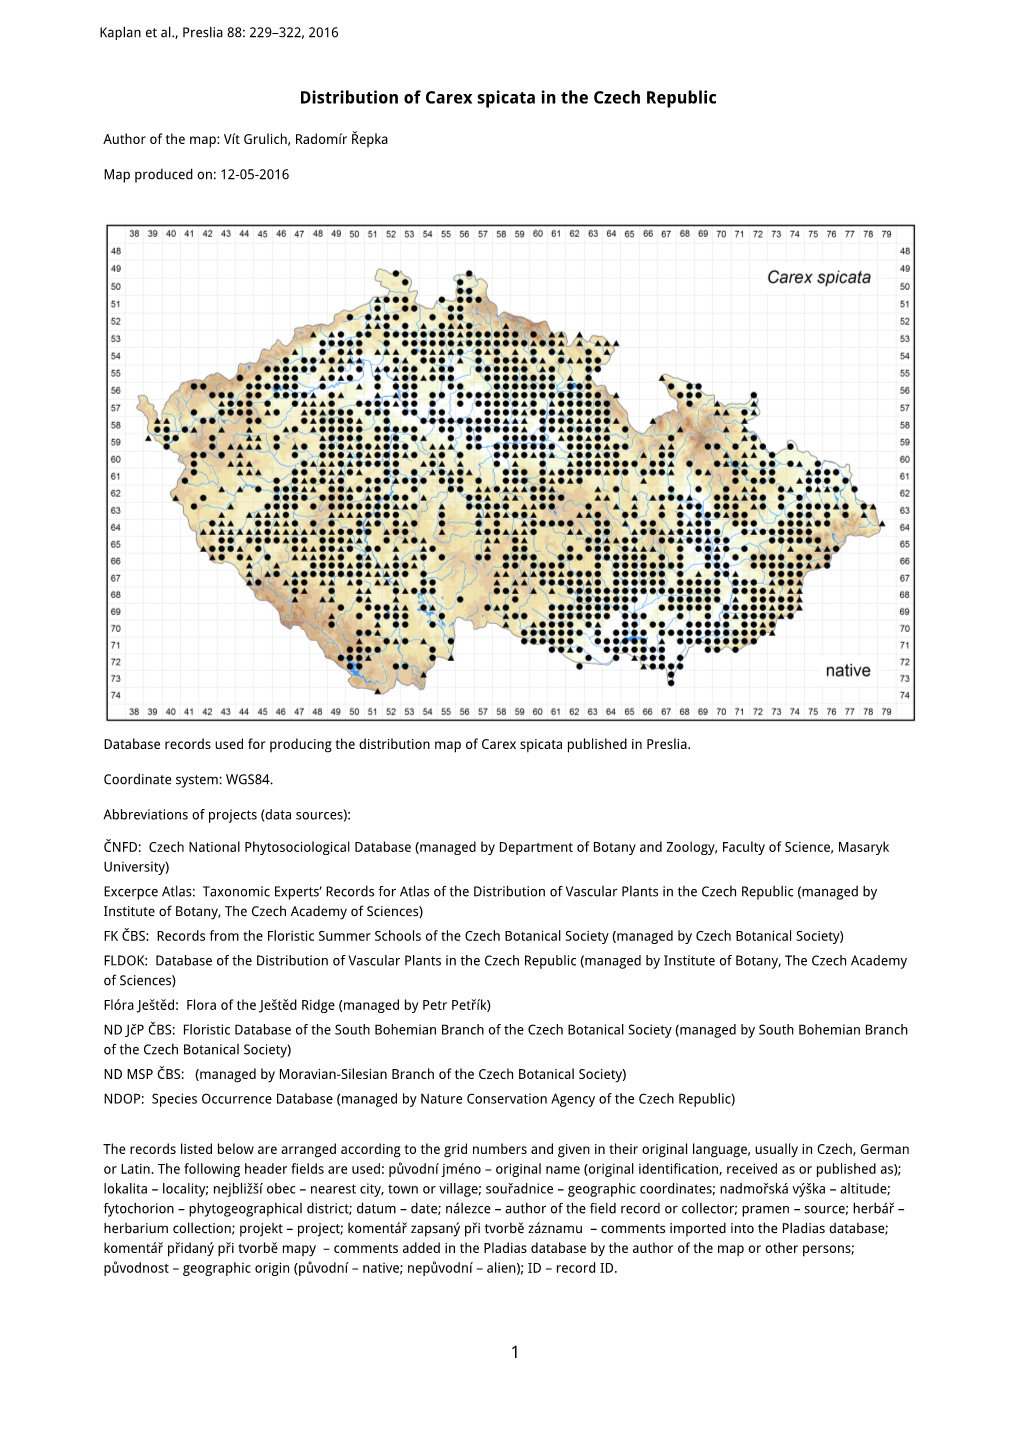 1 Distribution of Carex Spicata in the Czech Republic